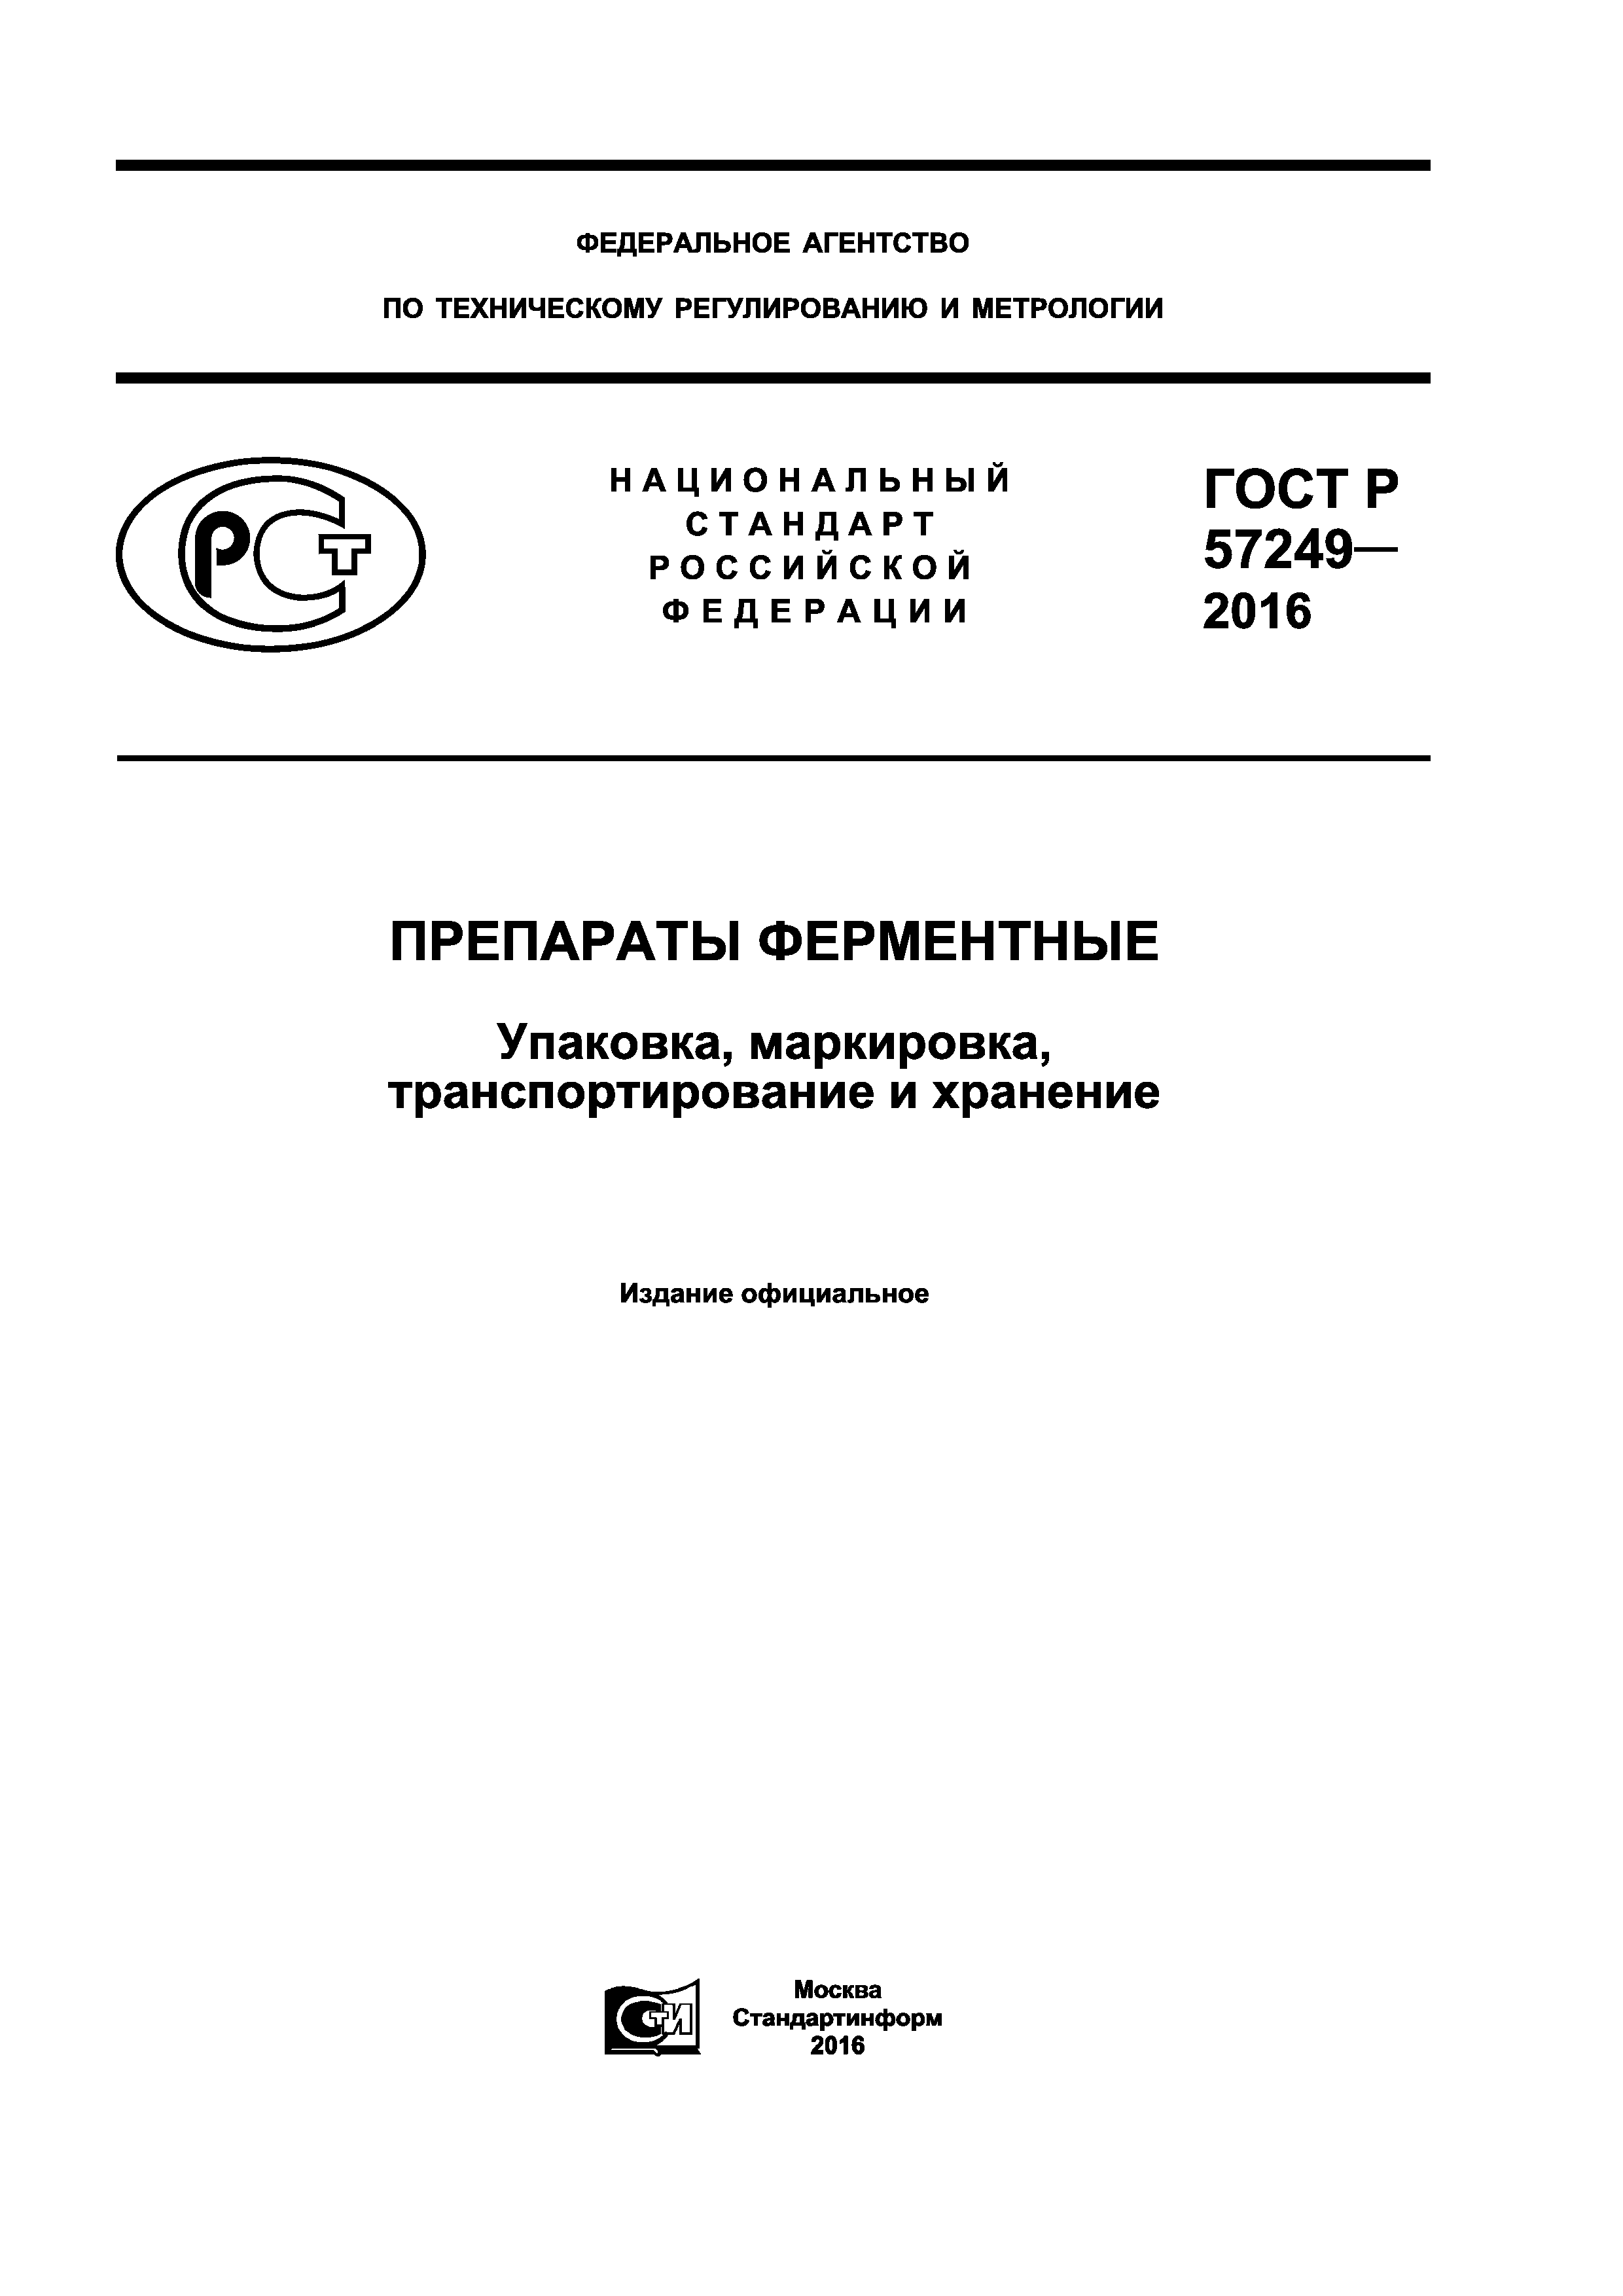 ГОСТ Р 57249-2016